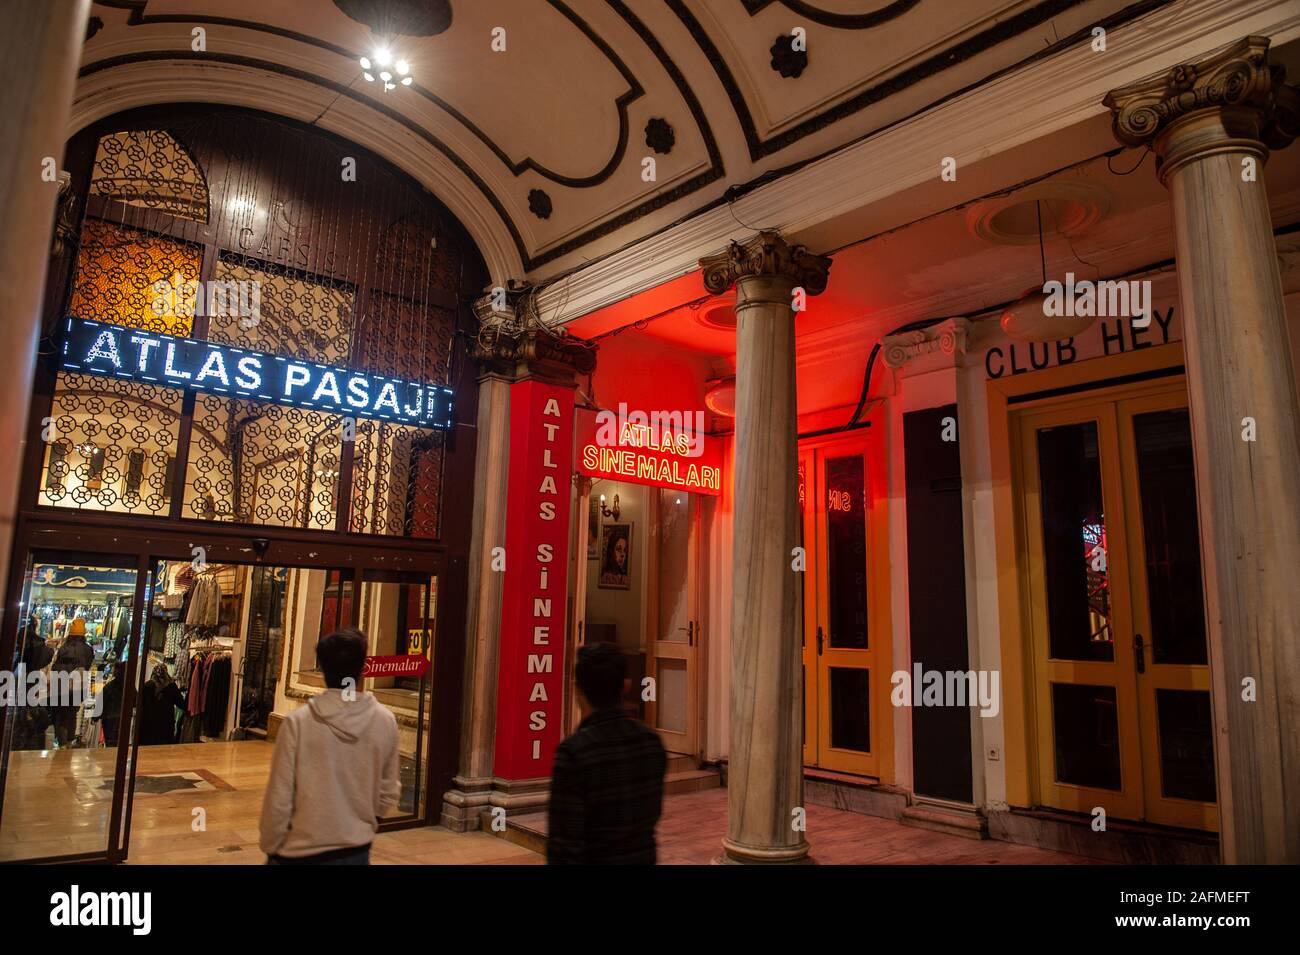 The entrance to Atlas Cinema, Atlas Pasaji, Istiklal street, Istanbul, Turkey Stock Photo